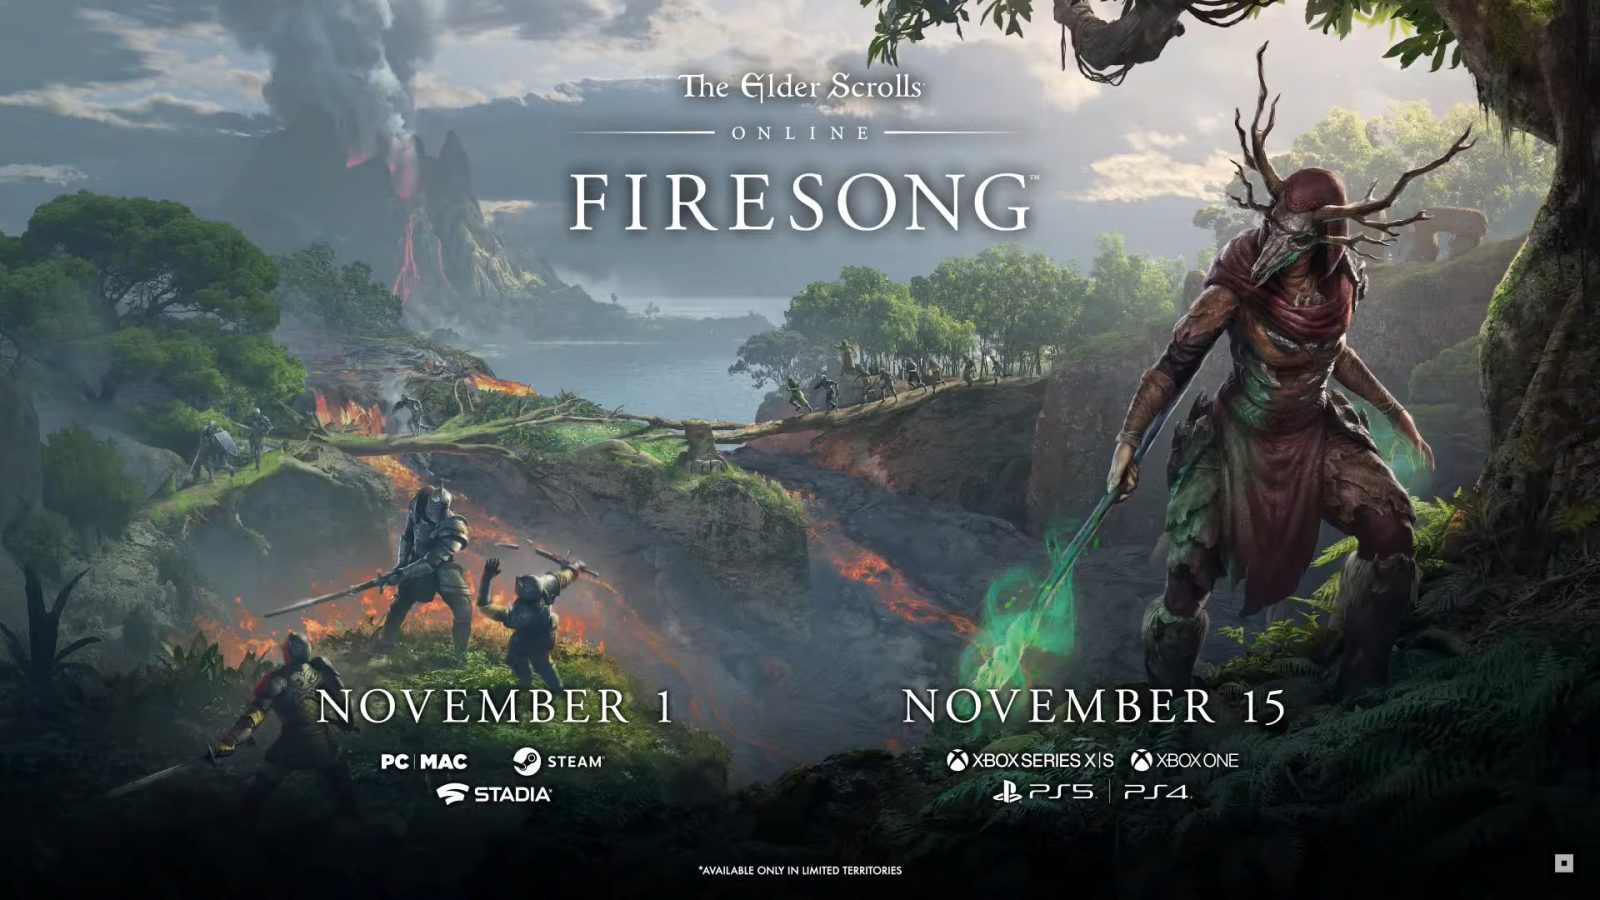 In-depth look at The Elder Scrolls Online's upcoming DLC, Firesong, released GAMING TREND